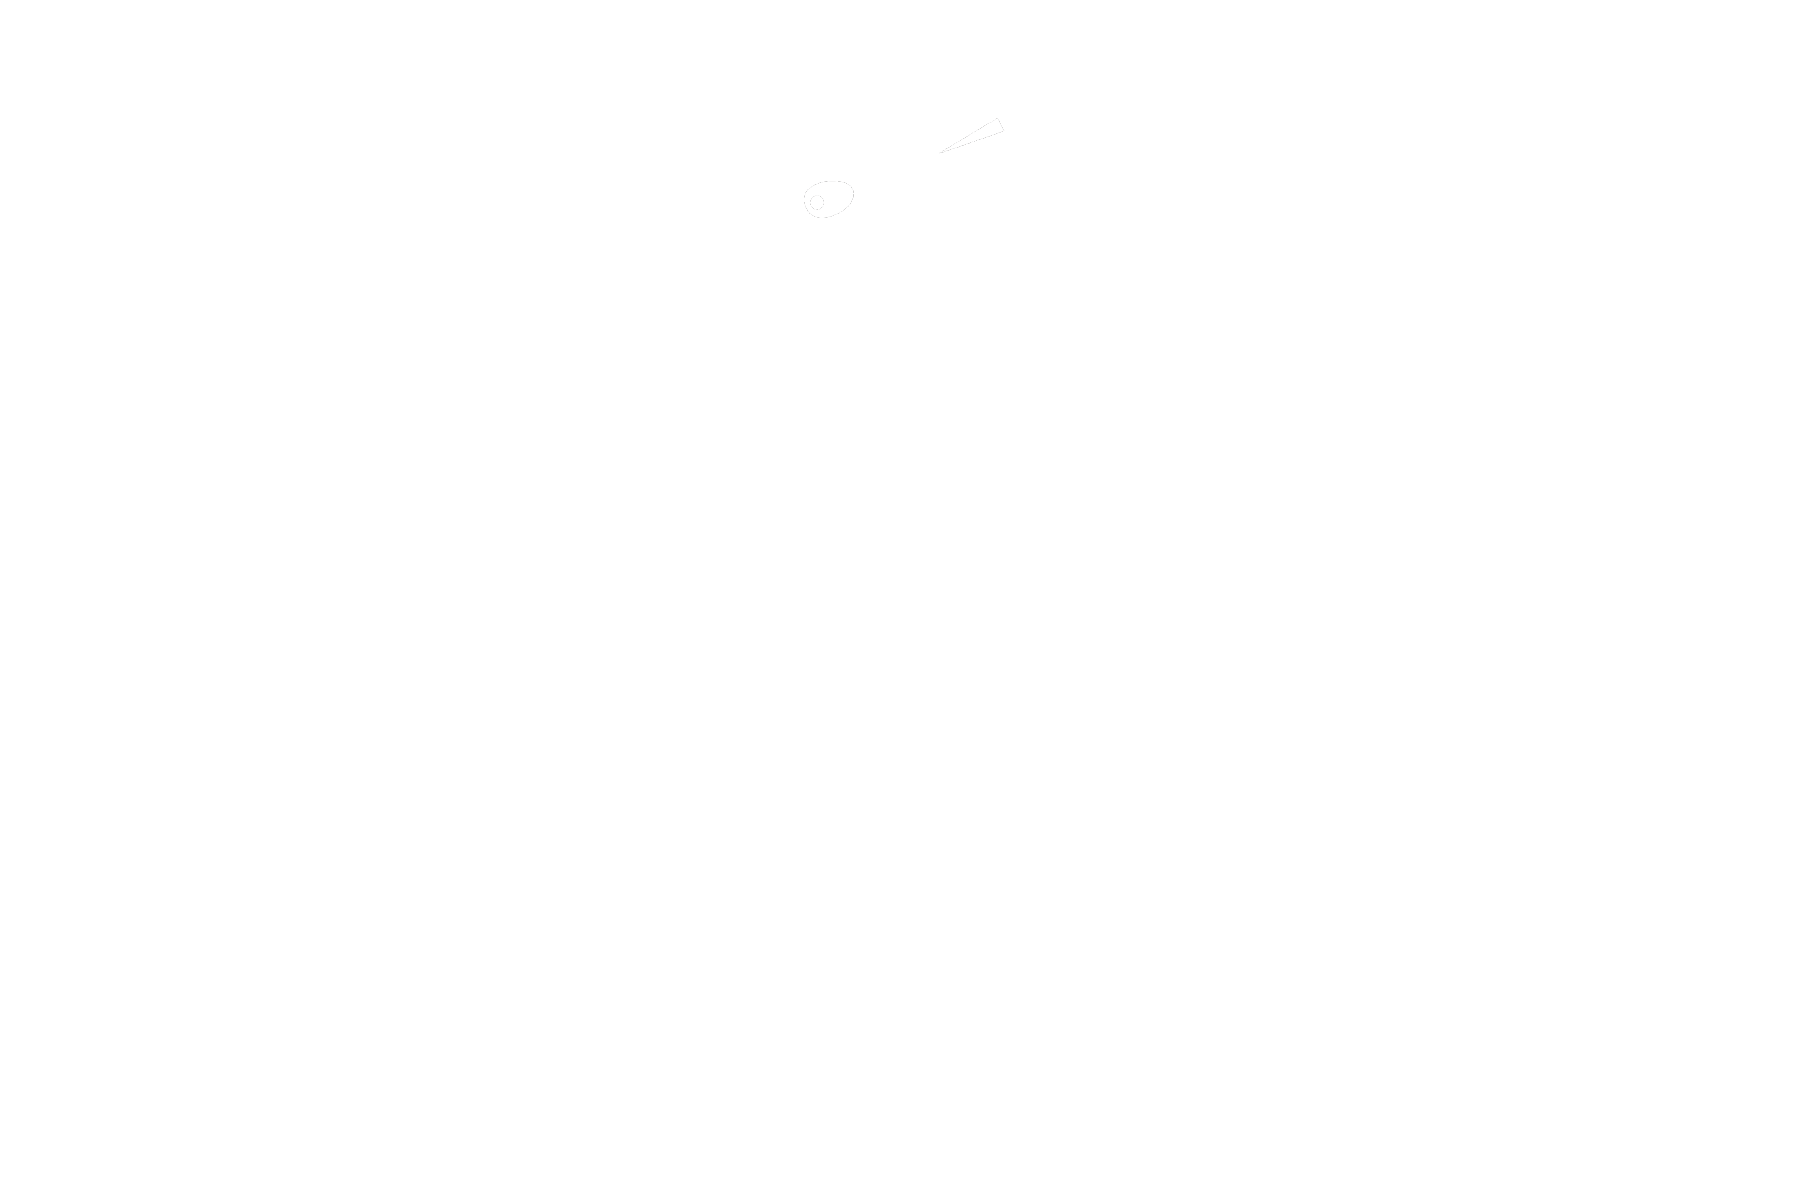 The Caviar Bar at Zero George